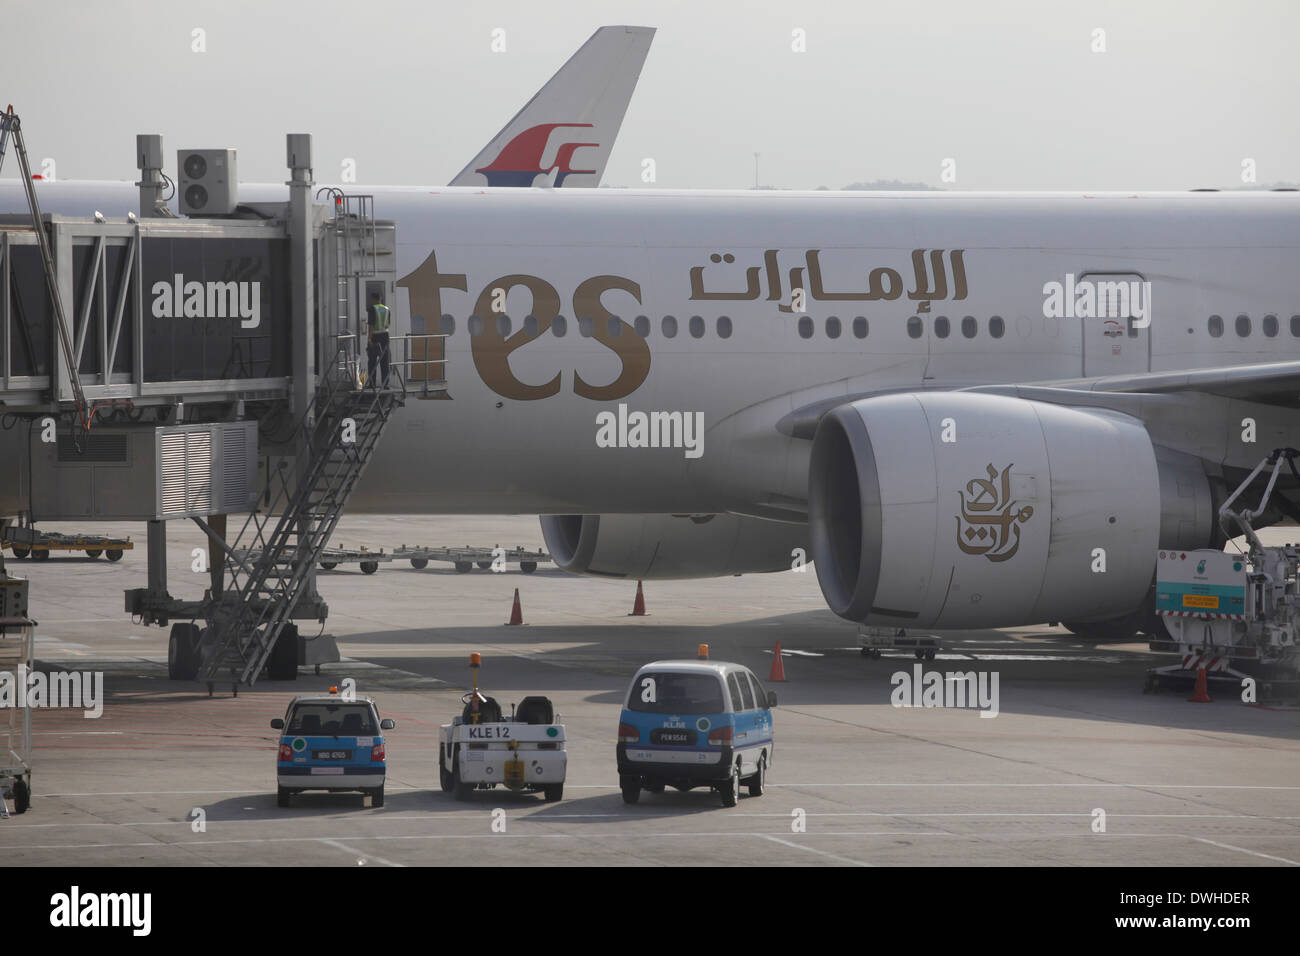 Emirates airplanes at Kuala Lumpur airport in Malaysia Stock Photo